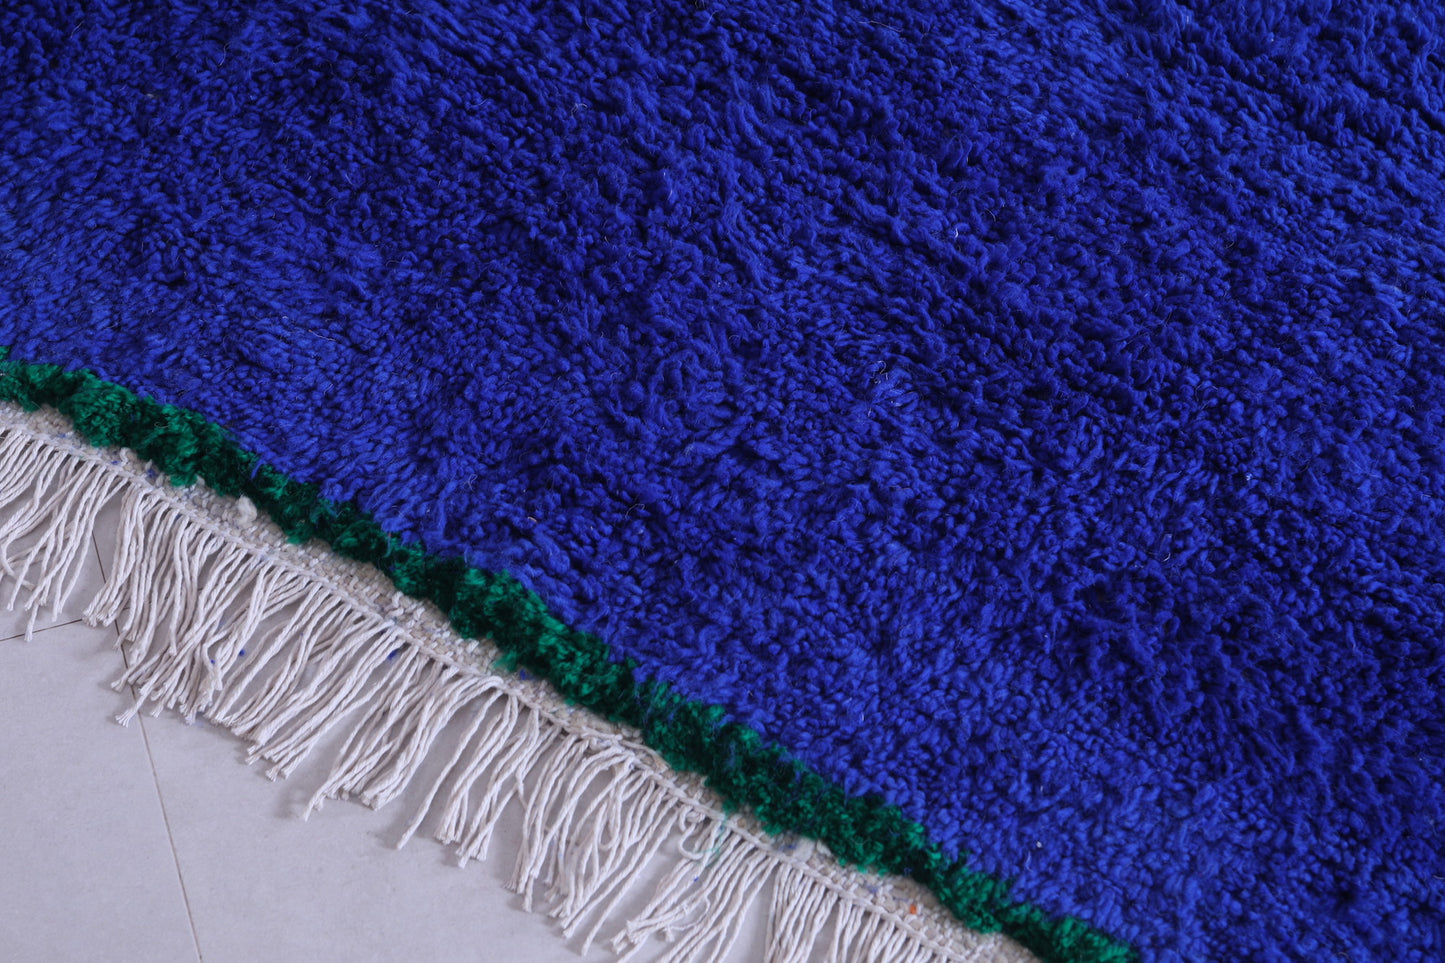 Shag Moroccan blue rug - Plain Moroccan blue rug - Custom Rug